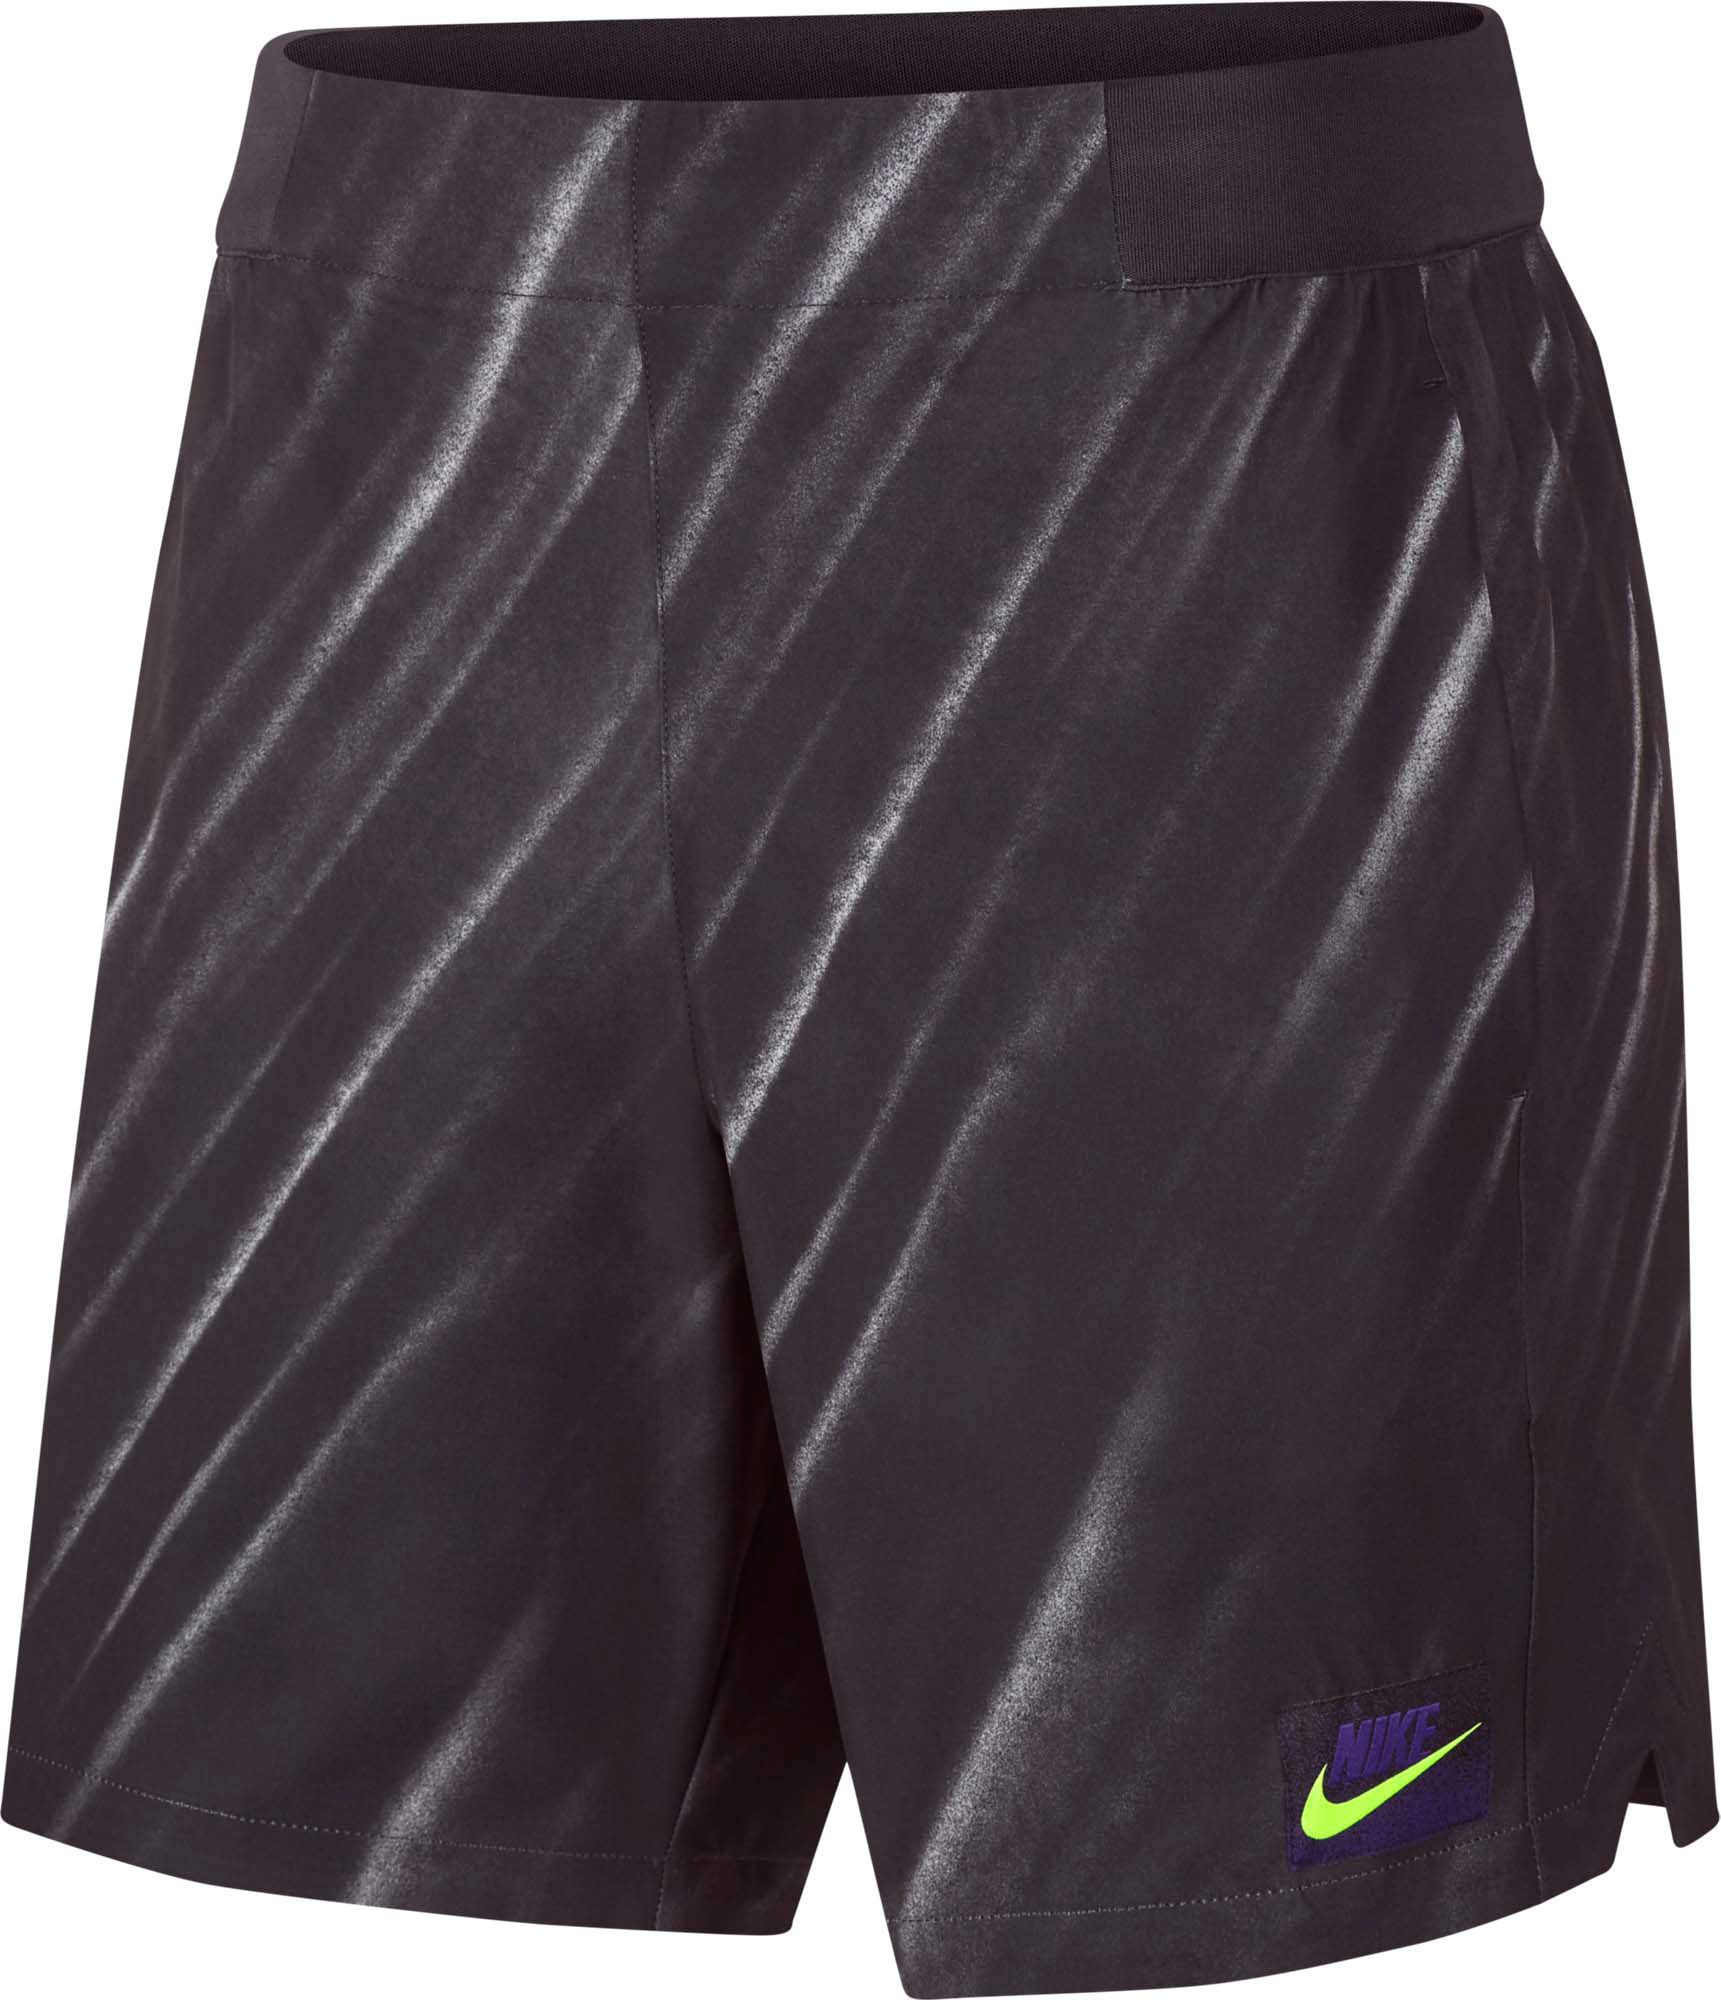 Nike Men's NikeCourt Flex Ace Tennis Shorts - .97 - .97